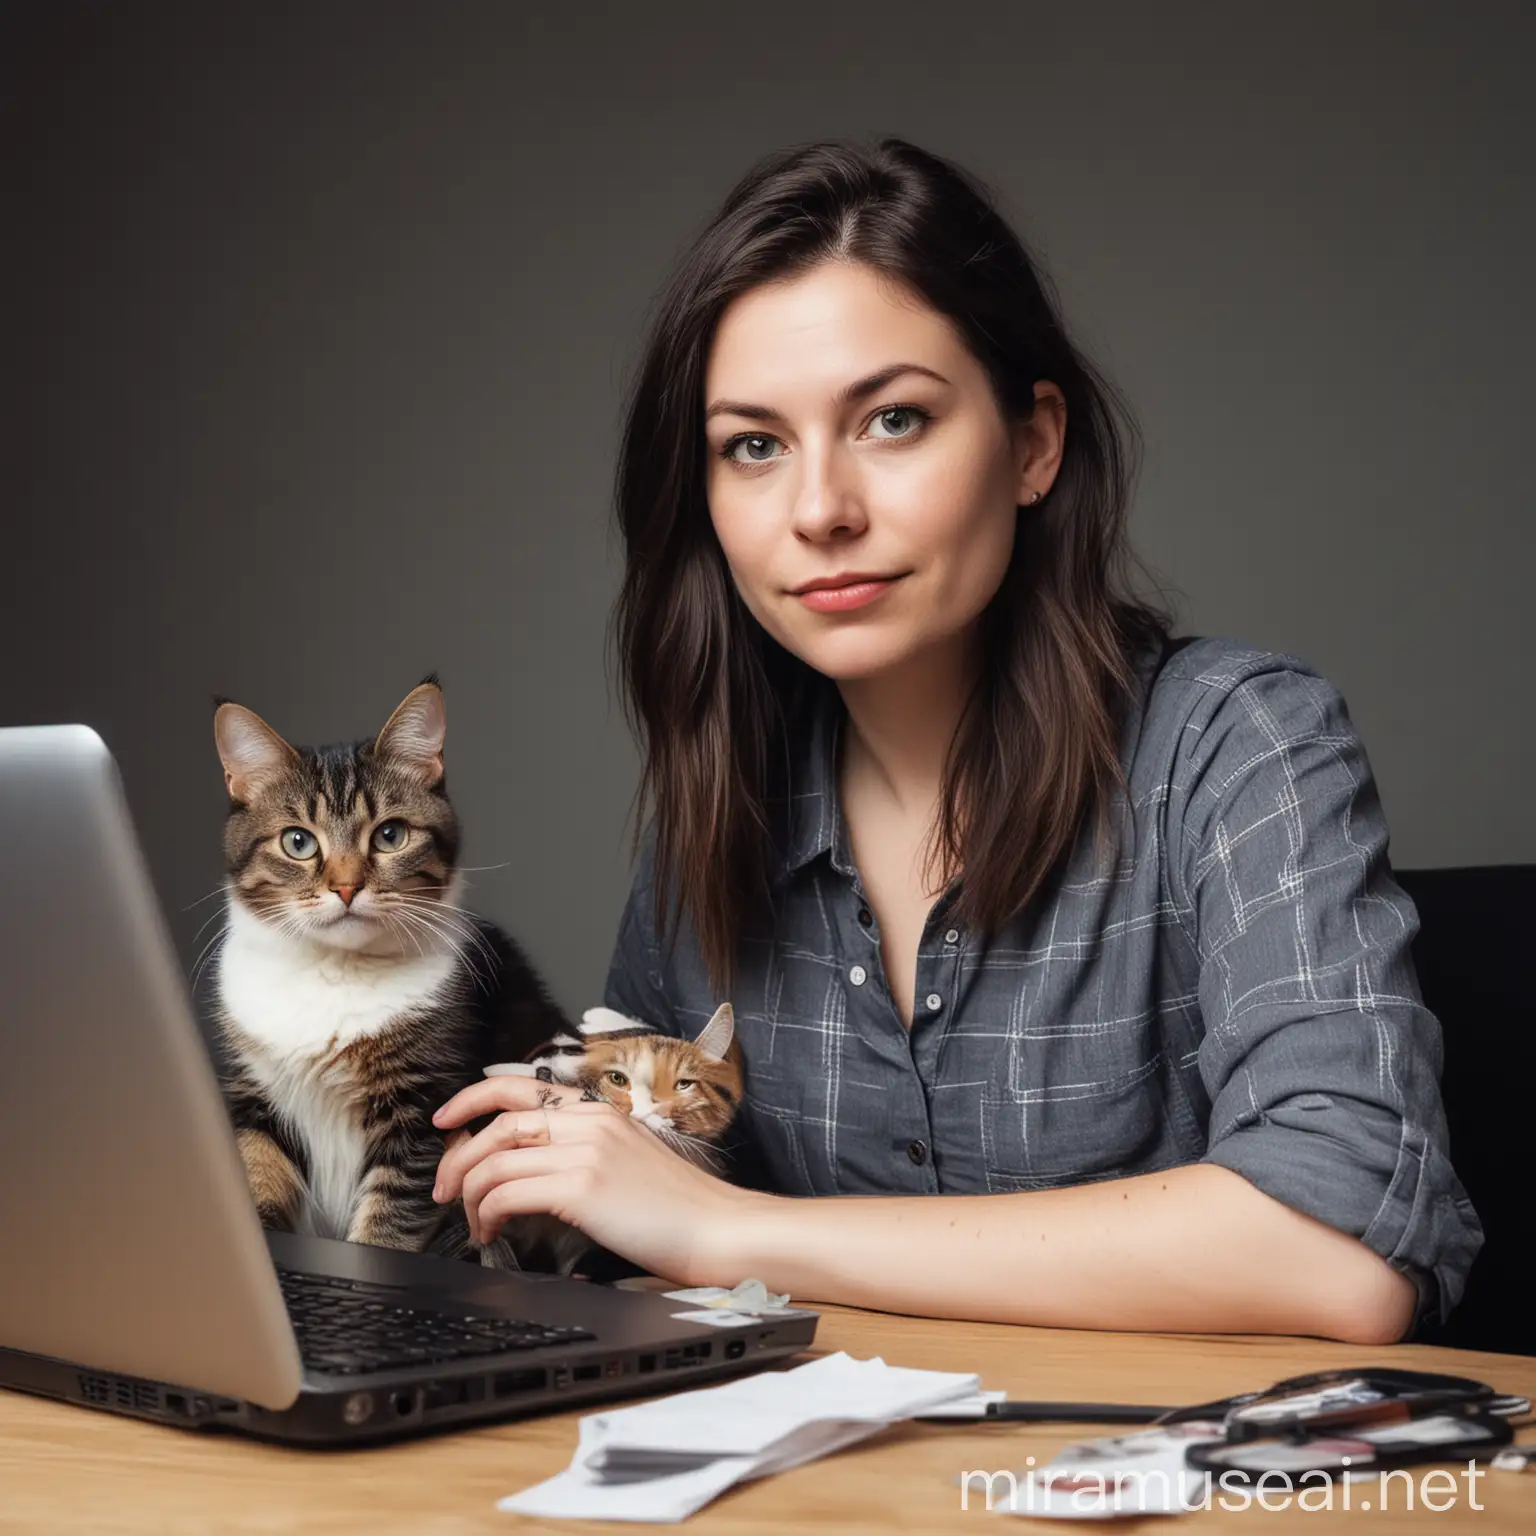 Creative Graphic Designer Portrait with Cat 29YearOld Introvert Productivity